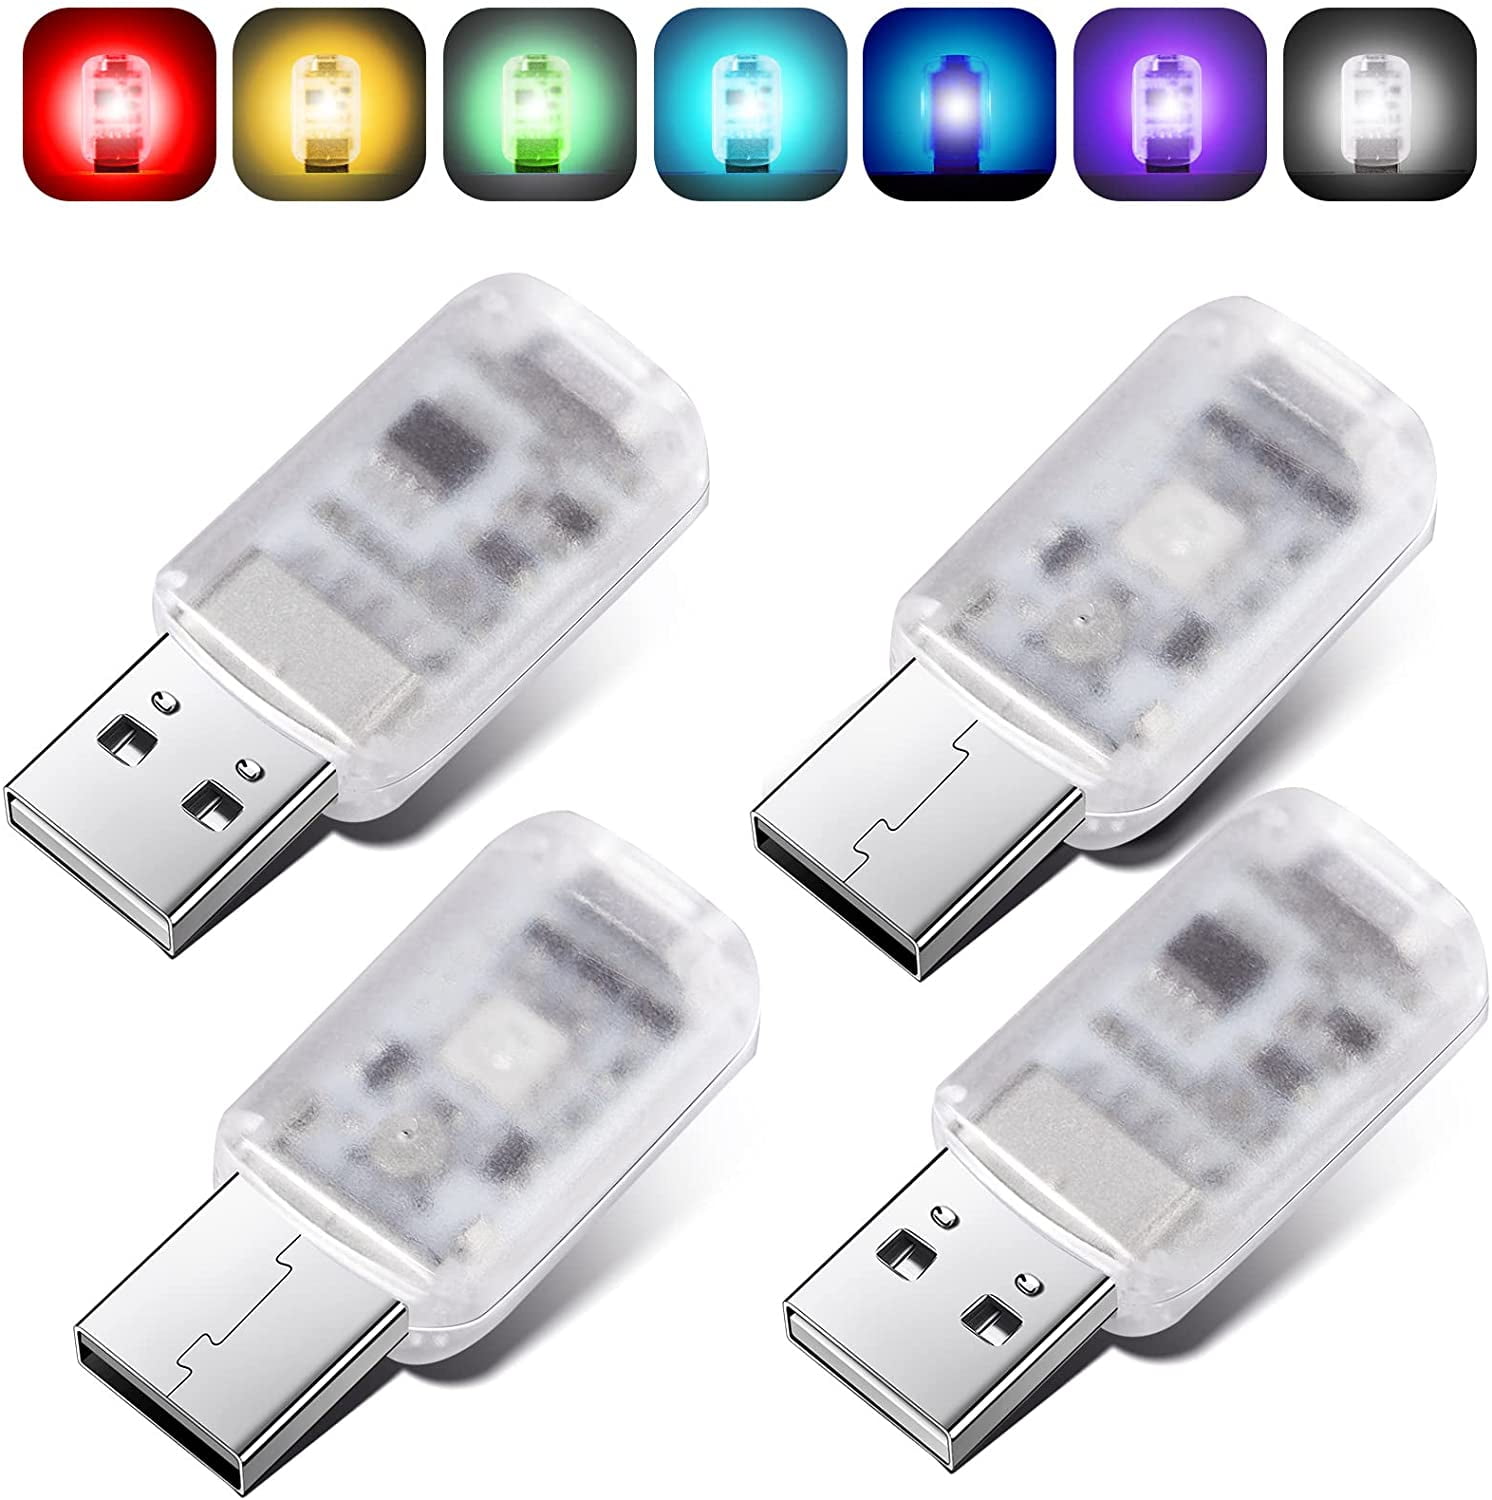  Frienda 4 Pieces Mini USB LED Light, RGB Car LED Interior  Lighting DC 5V Smart USB LED Atmosphere Light, Laptop Keyboard Light Home  Office Decoration Night Lamp, Adjustable Brightness, 8 Colors 